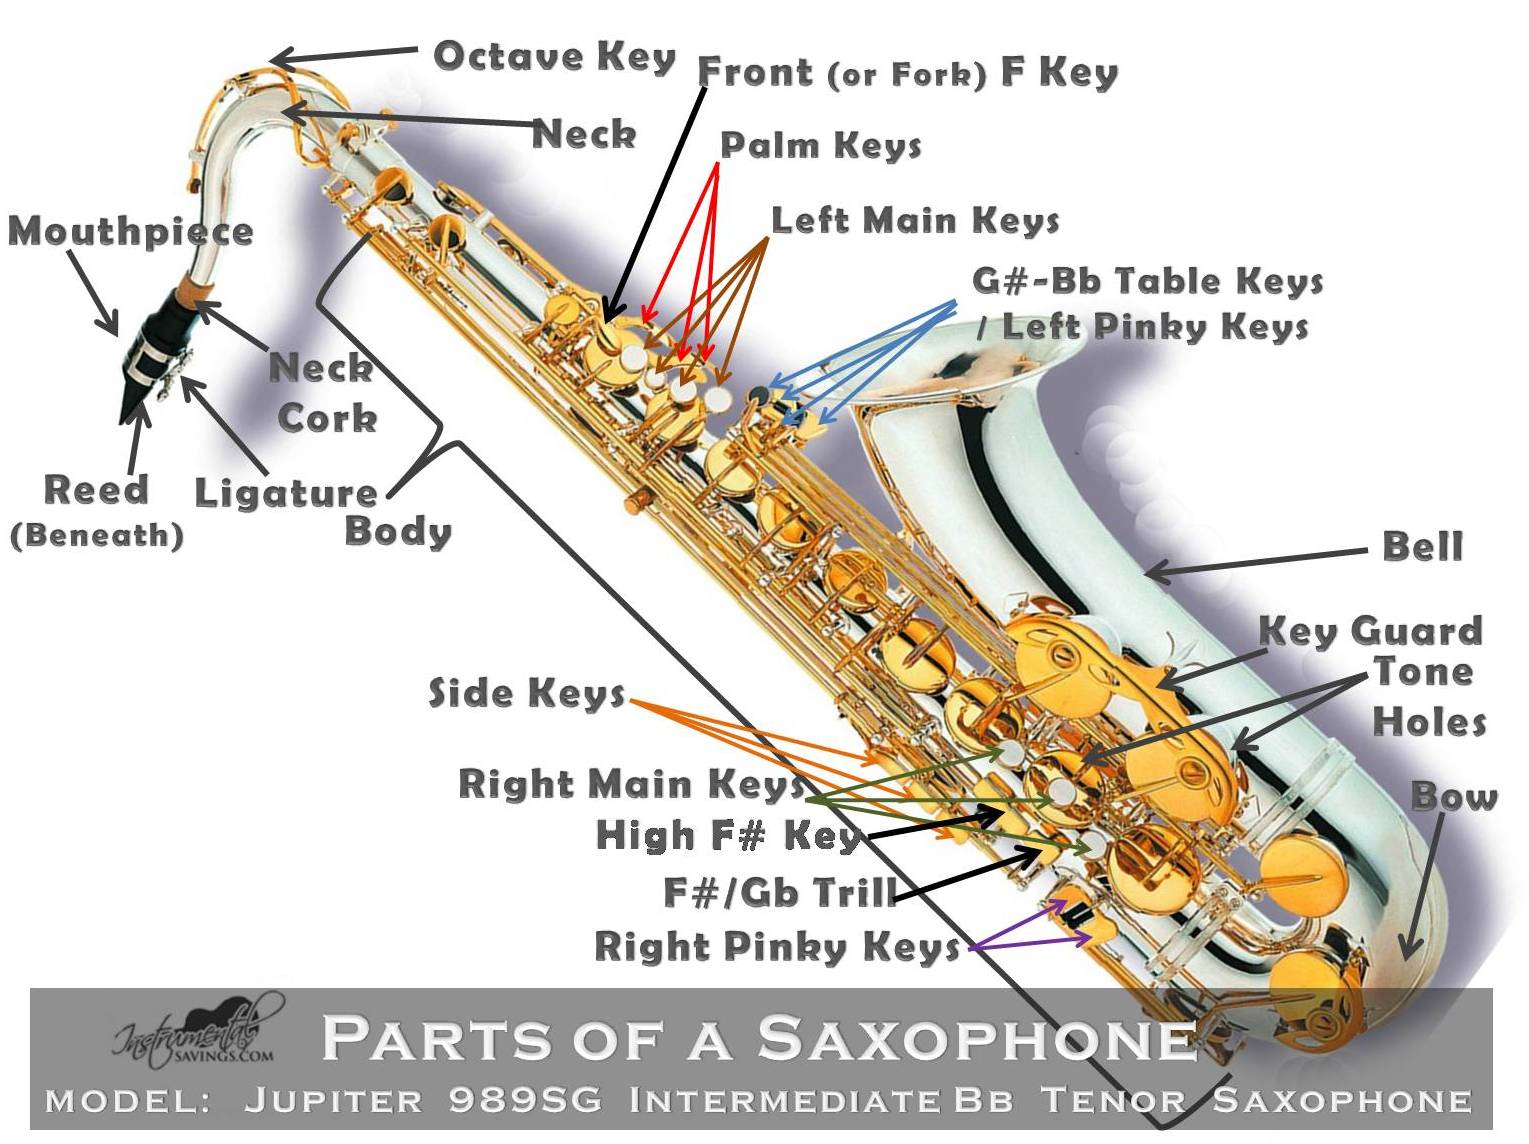 Parts of a Saxophone